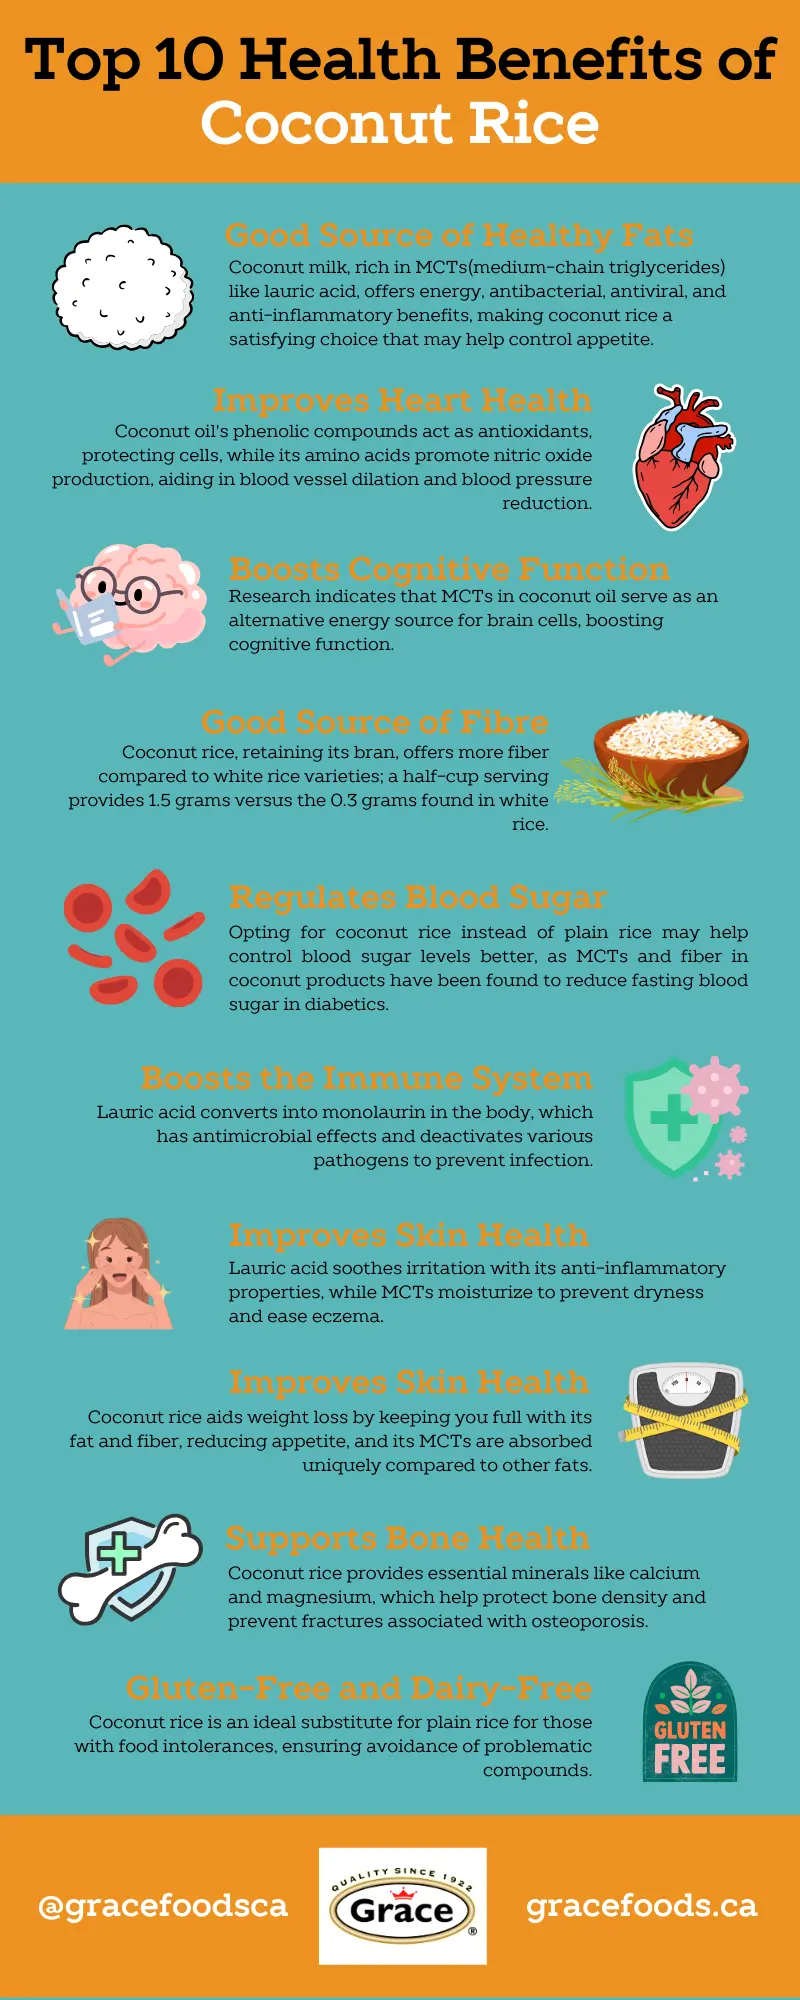 Top 10 Health Benefits of Coconut Rice